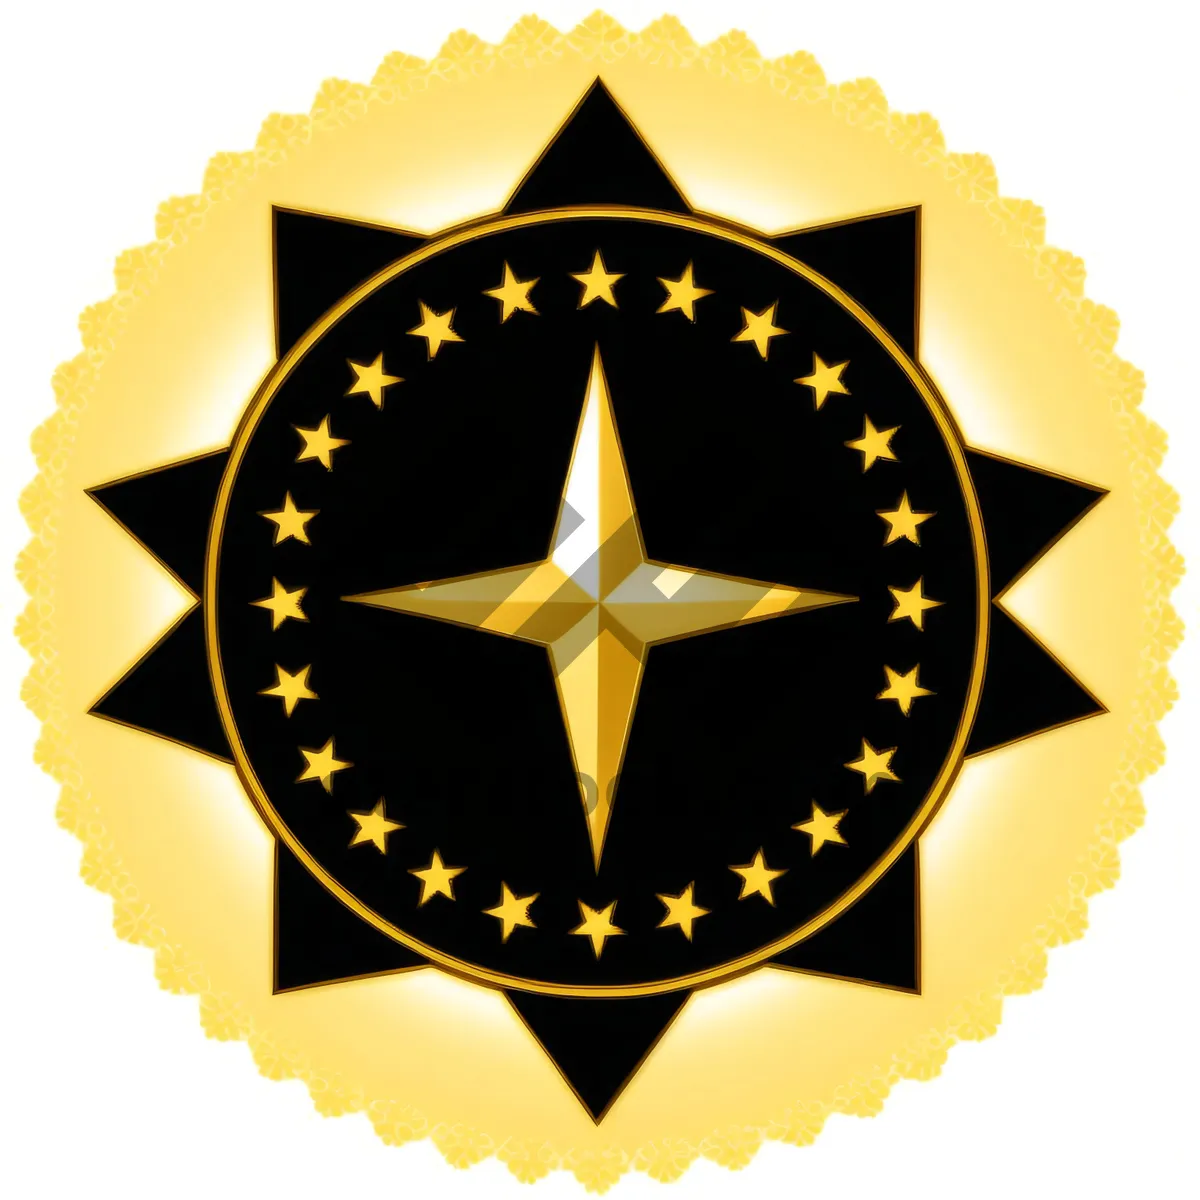 Picture of Golden Star Emblem - Regal Symbol of Heraldry and Design